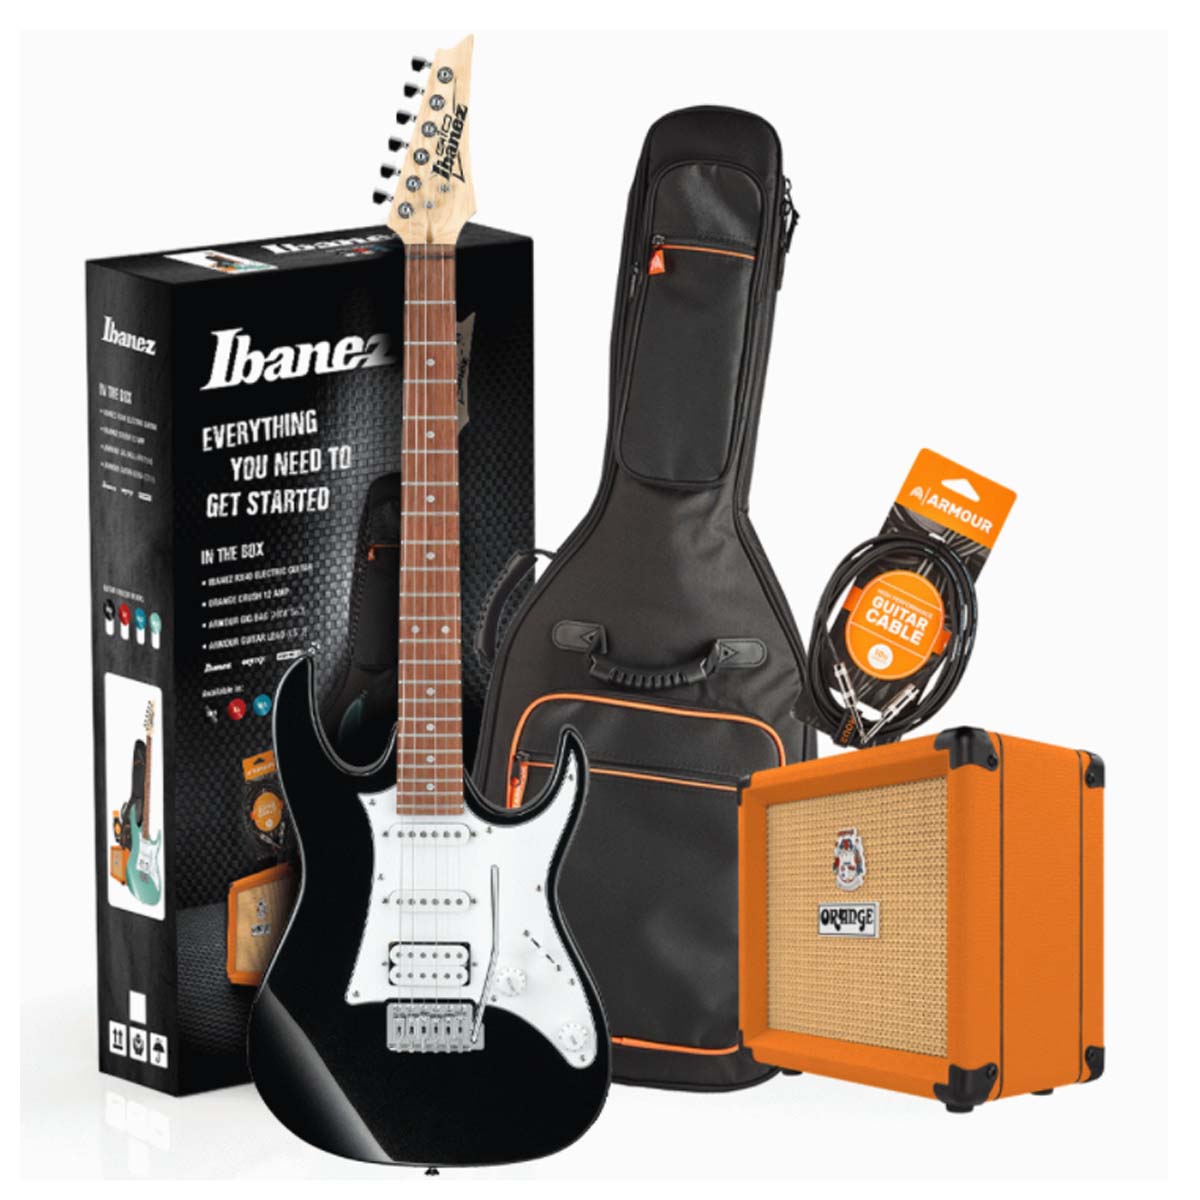 Ibanez RX40 Electric Guitar Pack Black w/ Orange Crush 12 Amp & Bag & Lead - GTPRX40BKNPACK